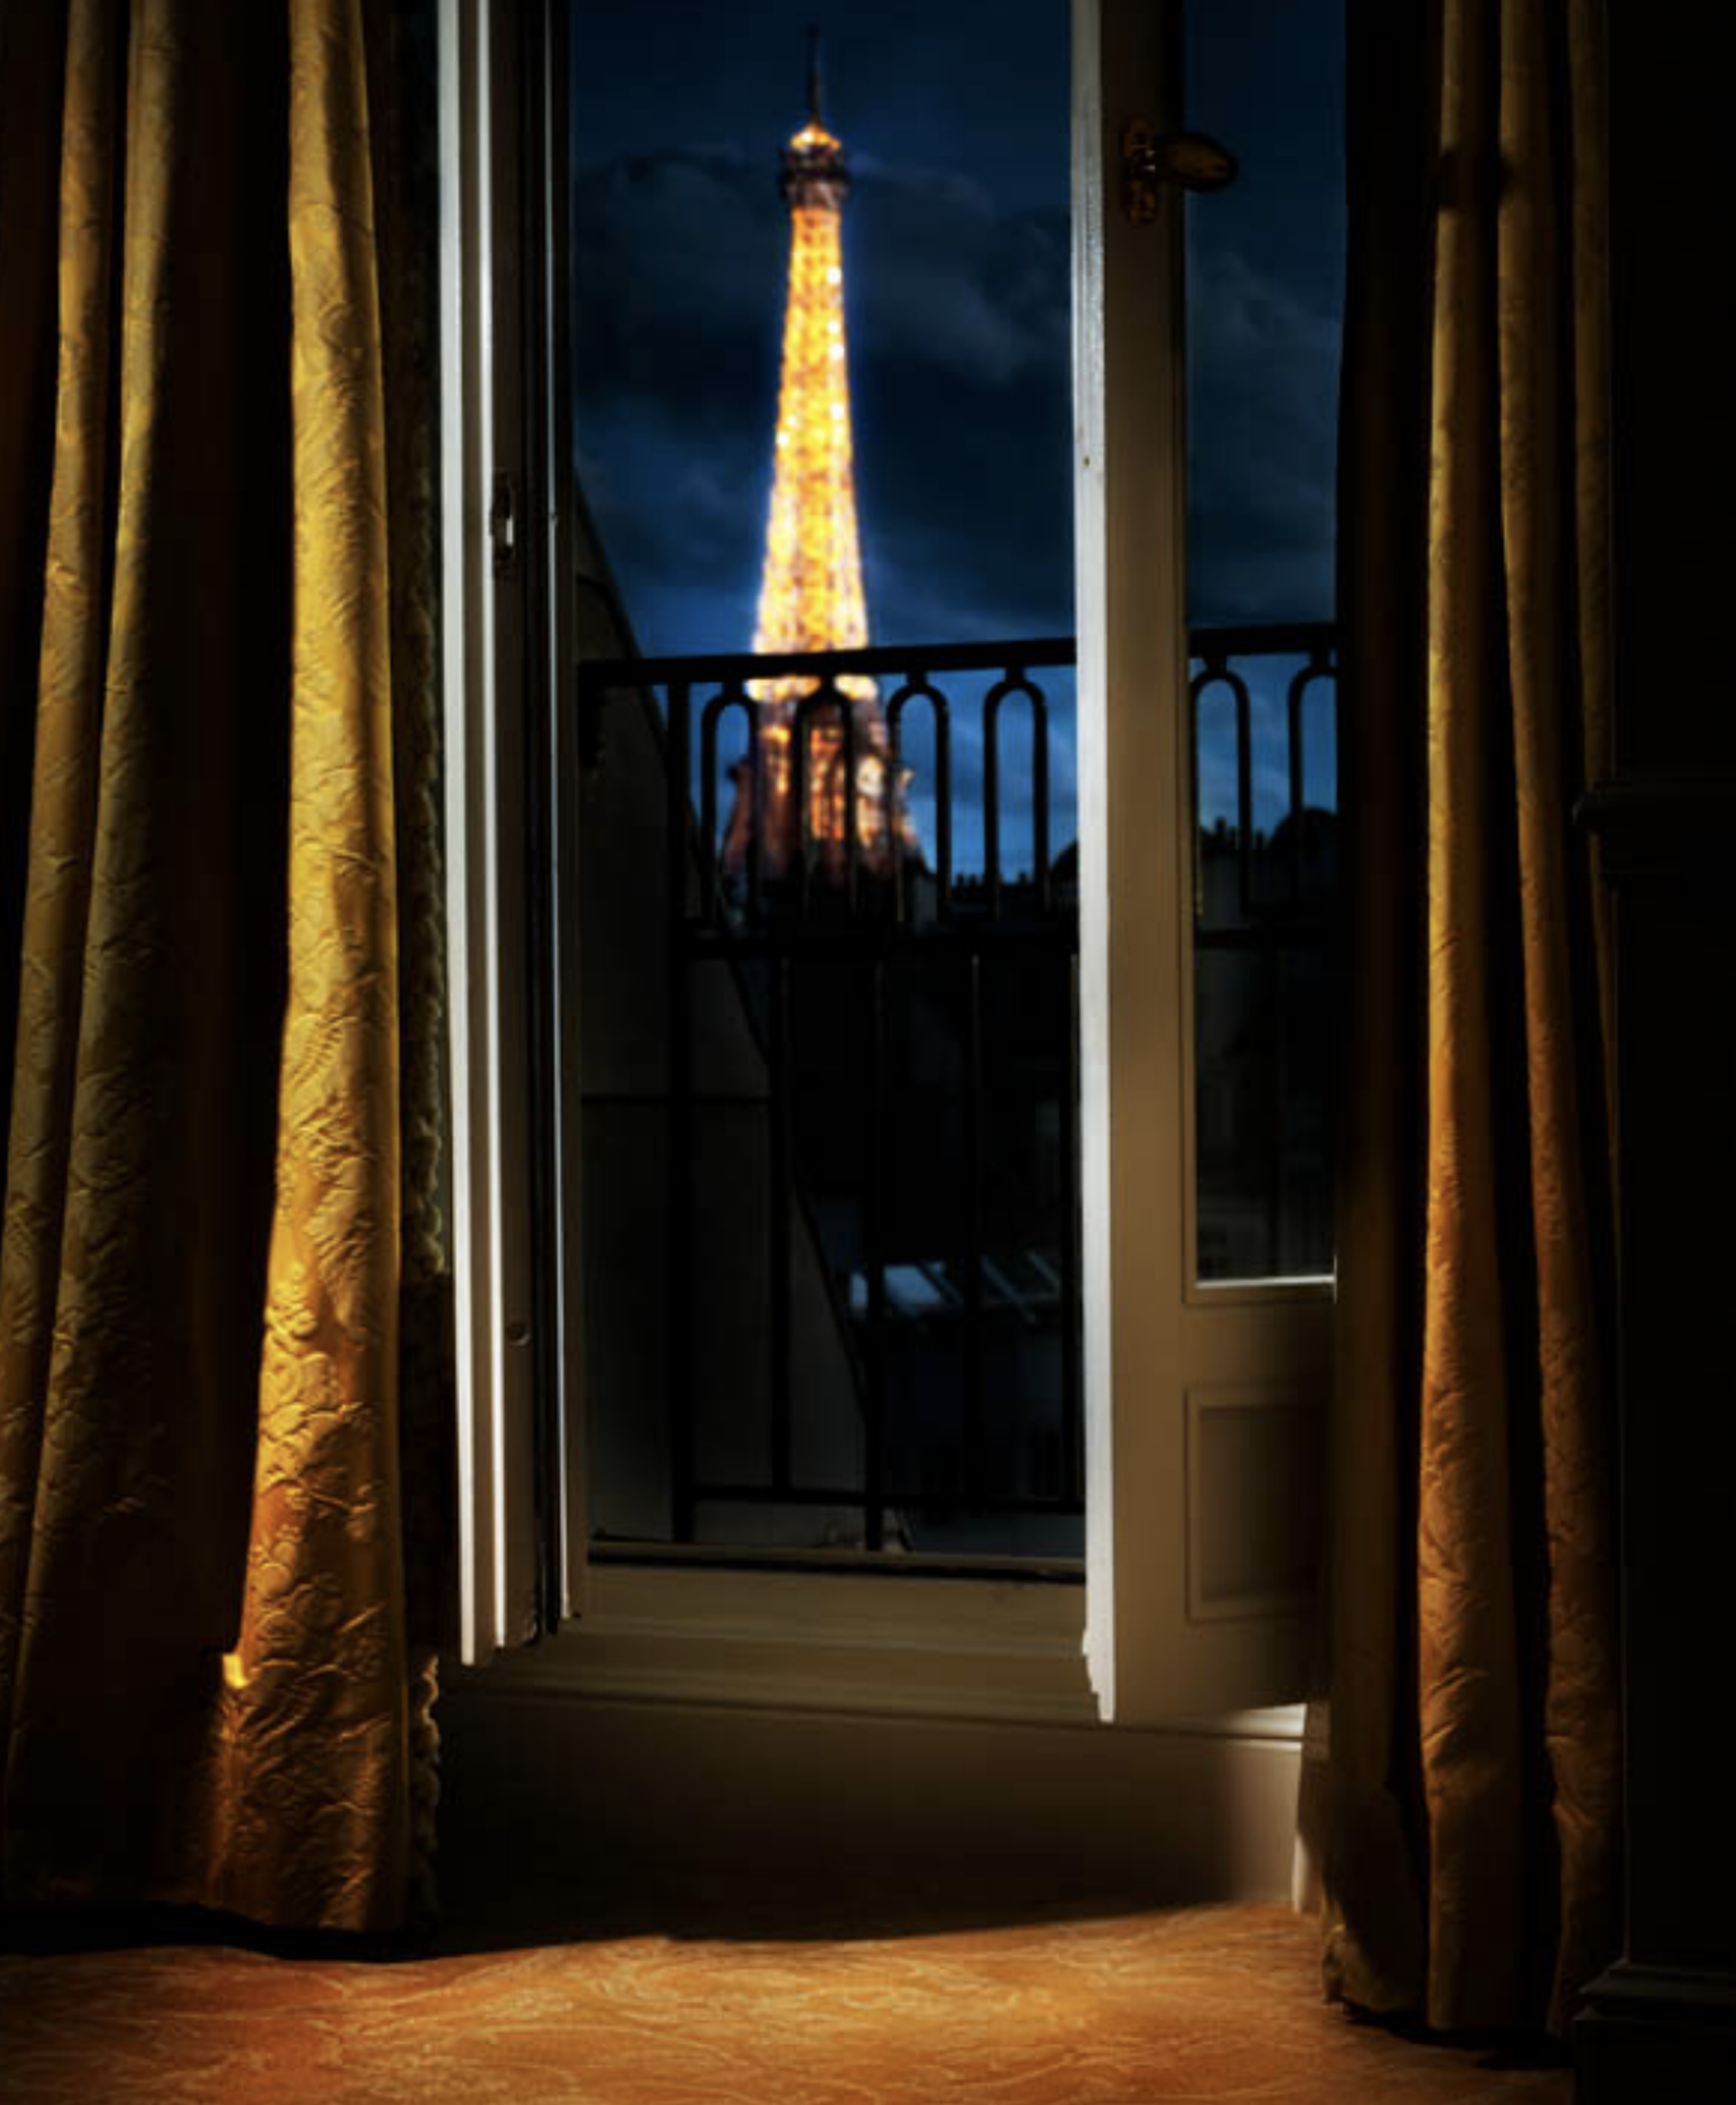 Paris nights by David Drebin